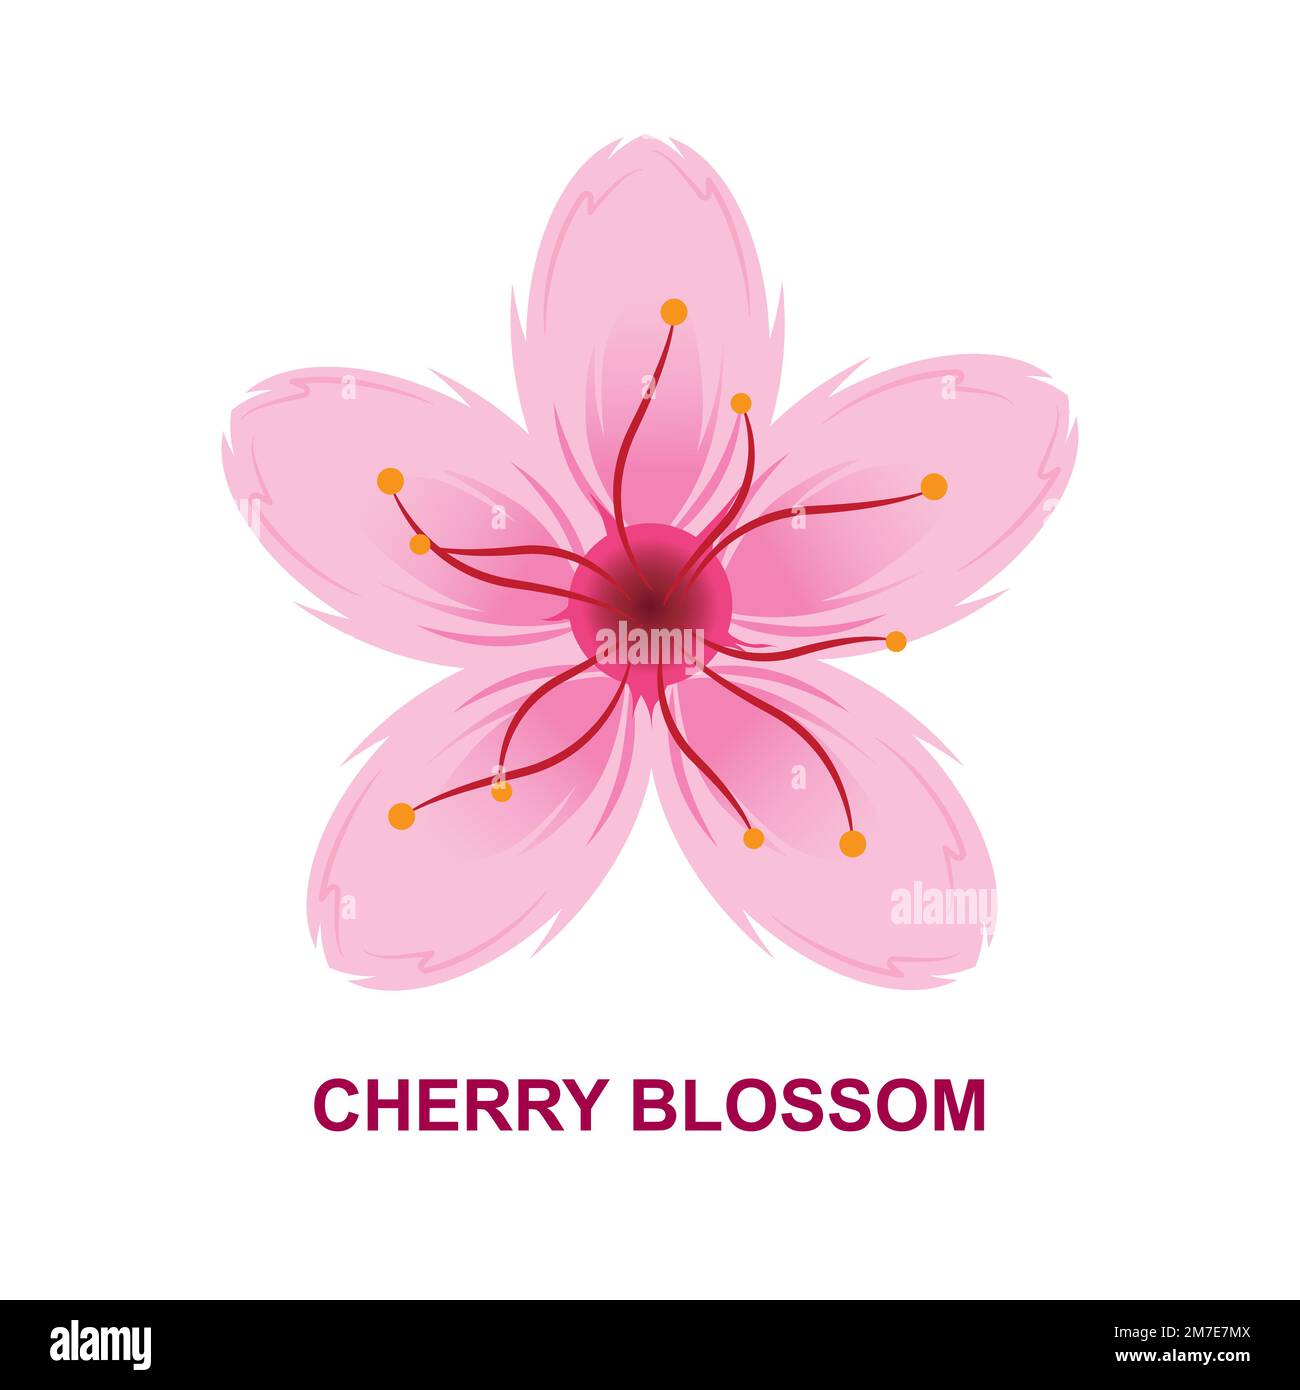 Cherry Blossom Vector Illustration Stock Vector